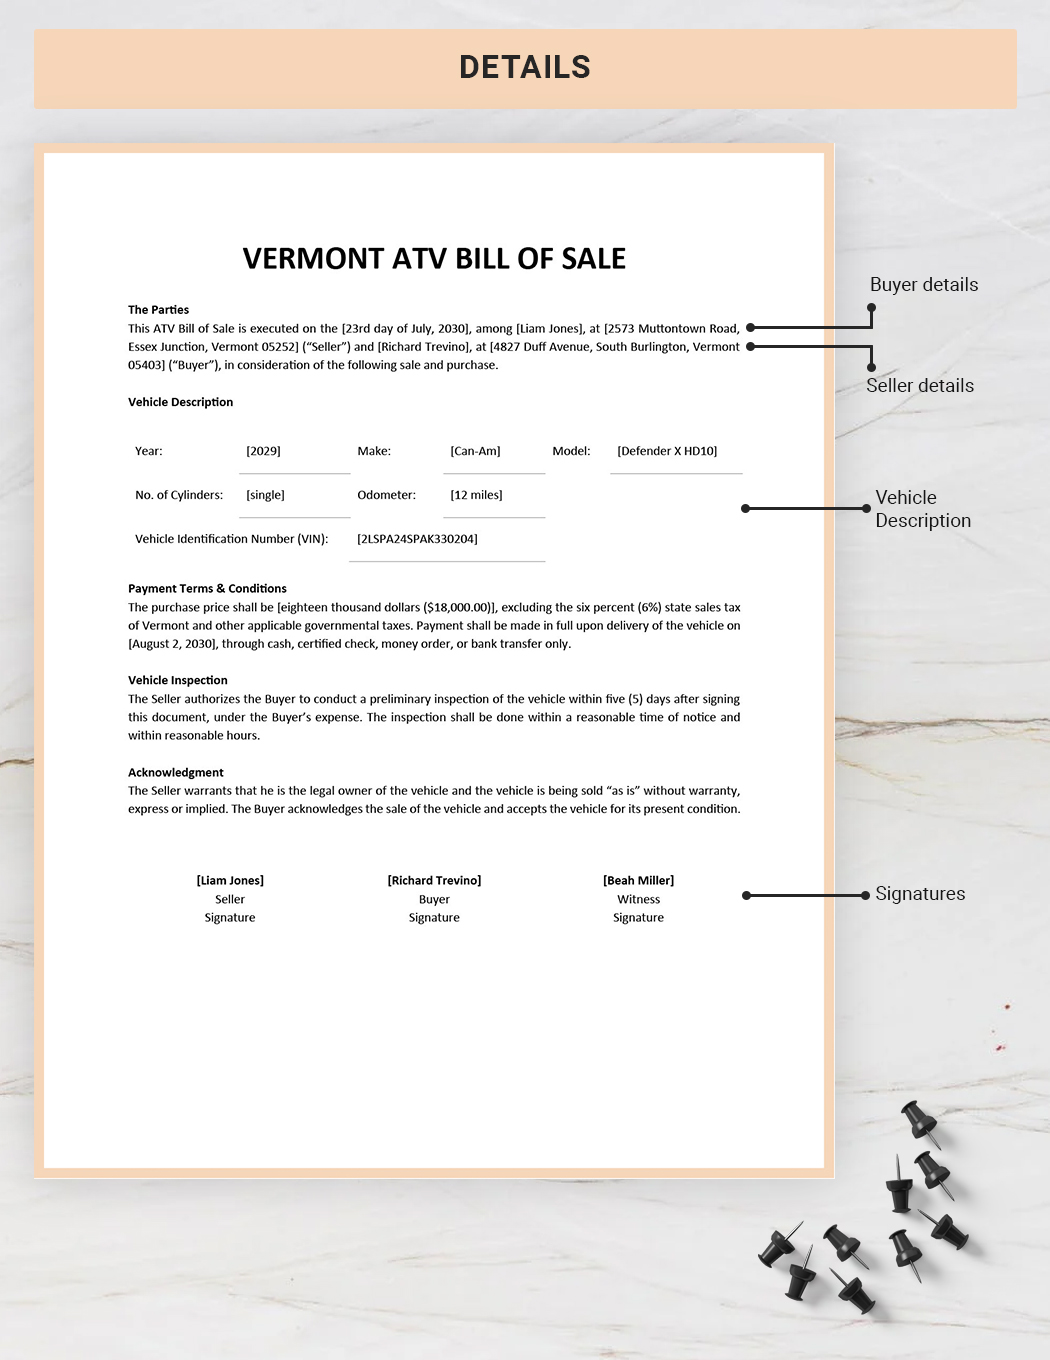 Vermont ATV Bill of Sale Template Details